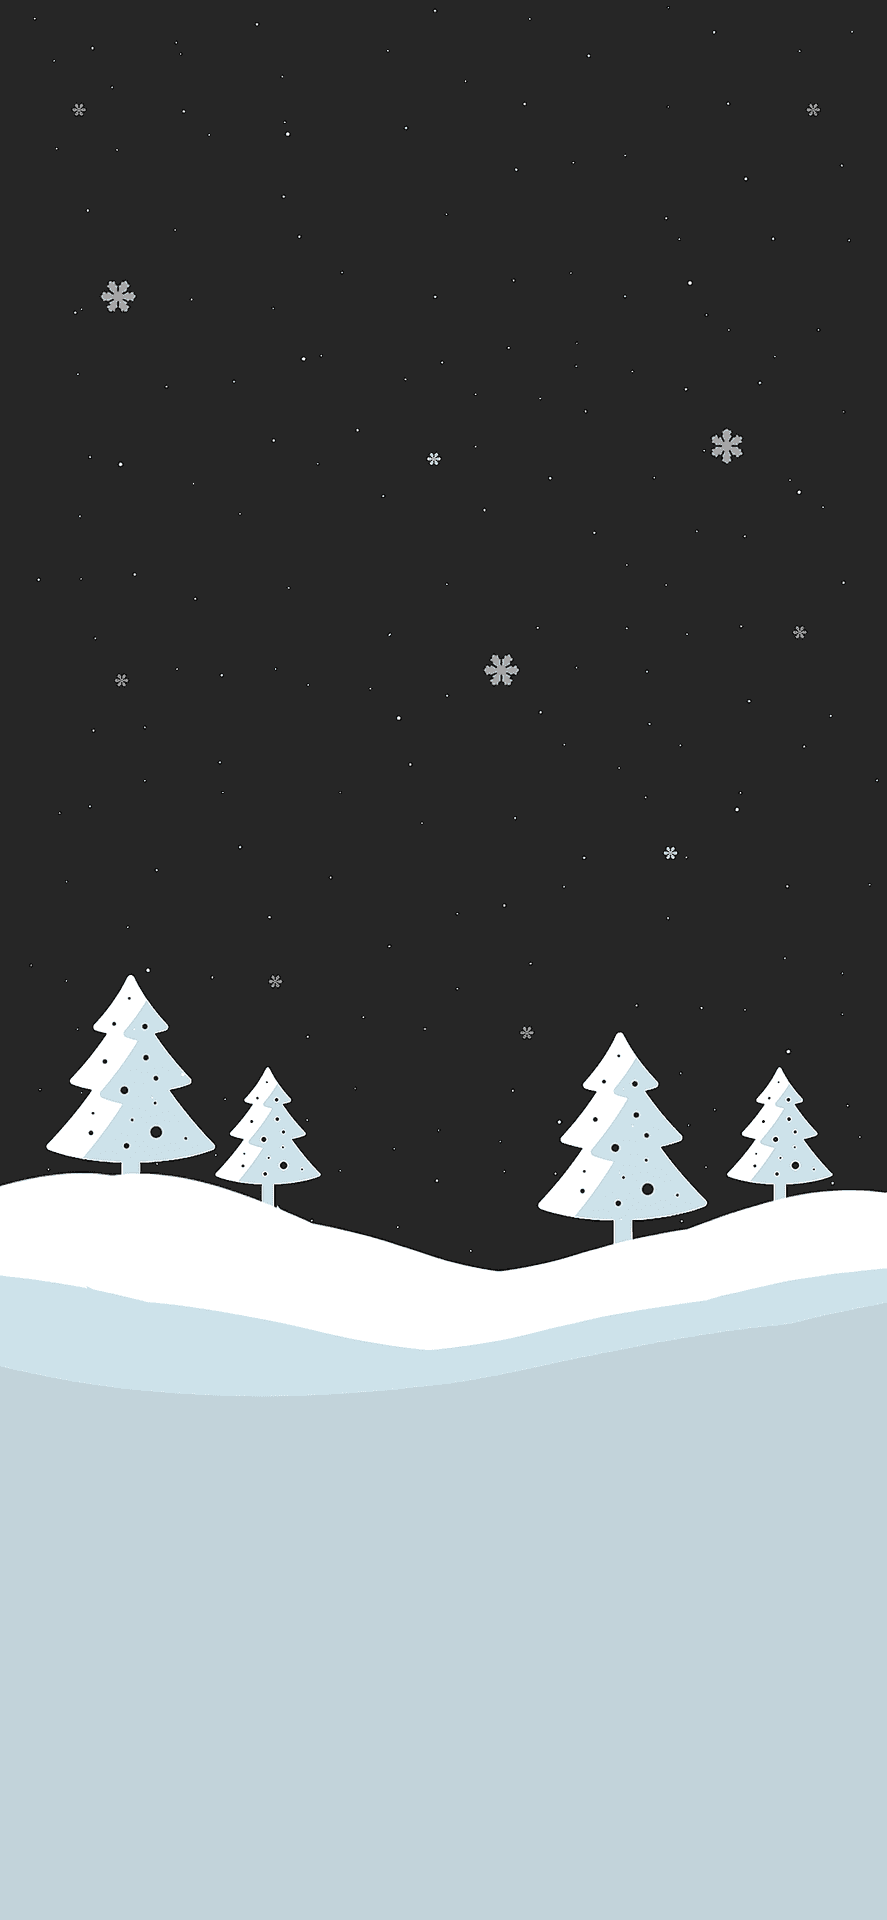 A White Christmas Eve